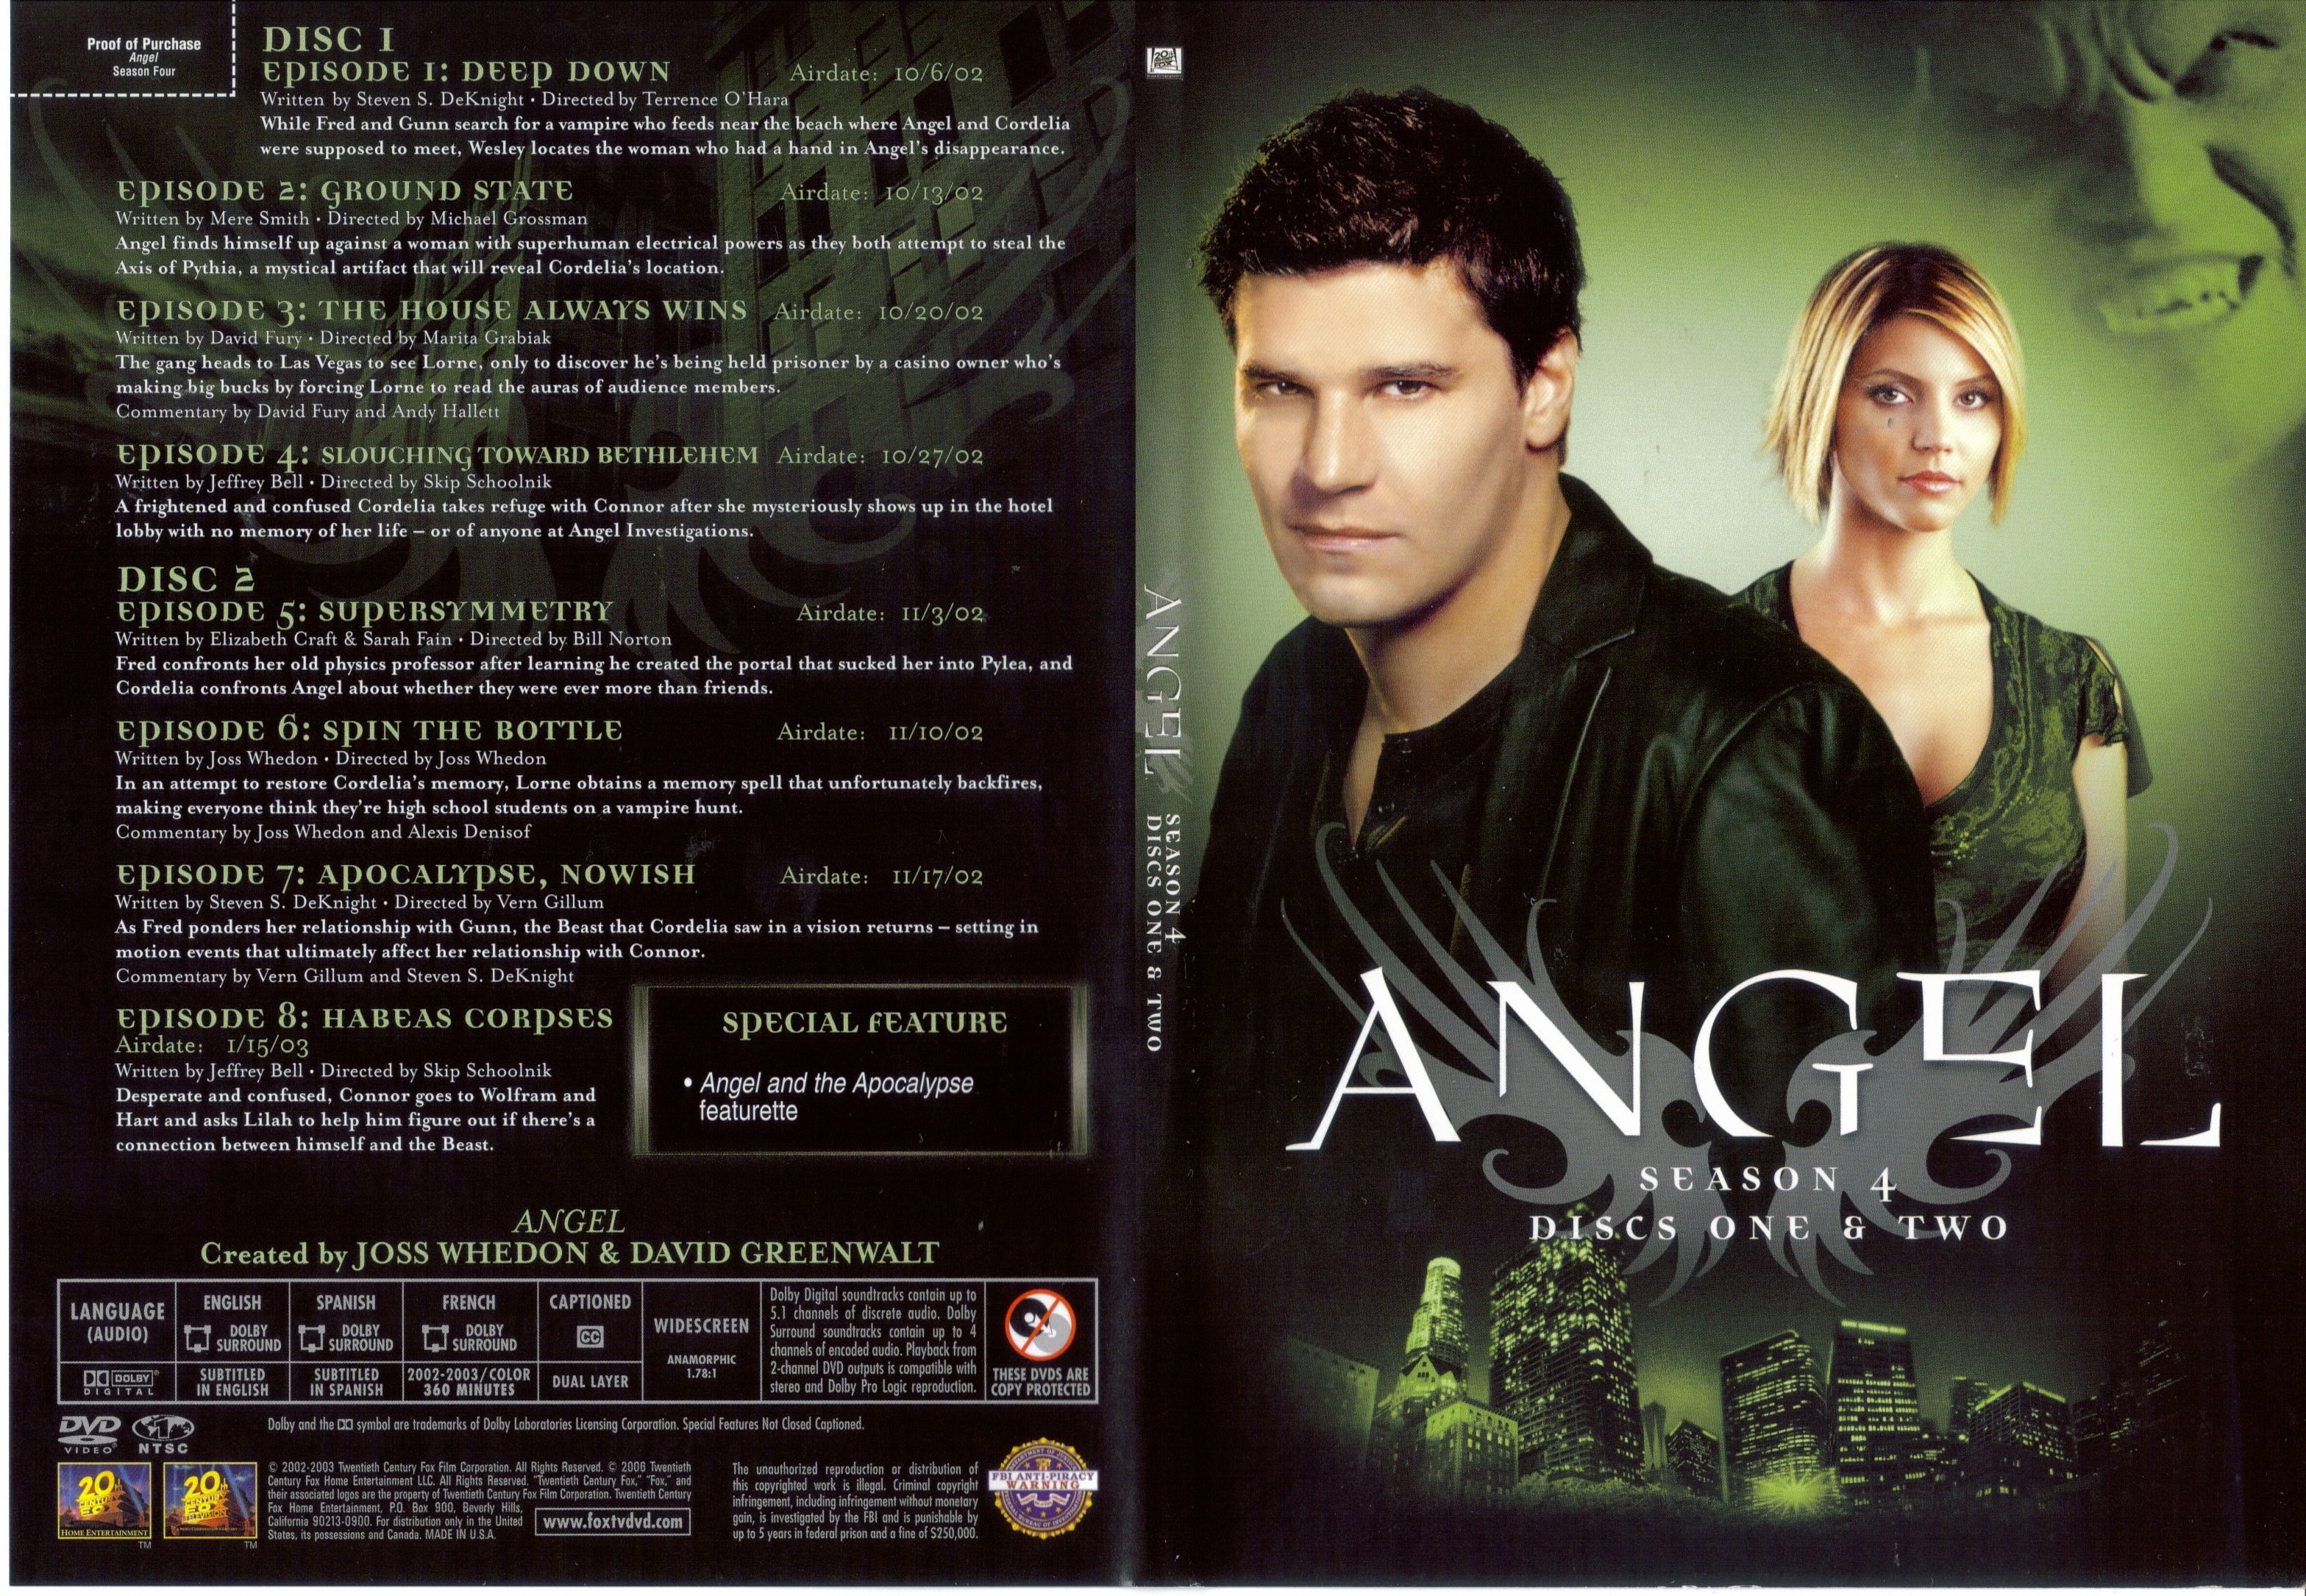 Jaquette DVD Angel Saison 4 DVD 1 (Canadienne)